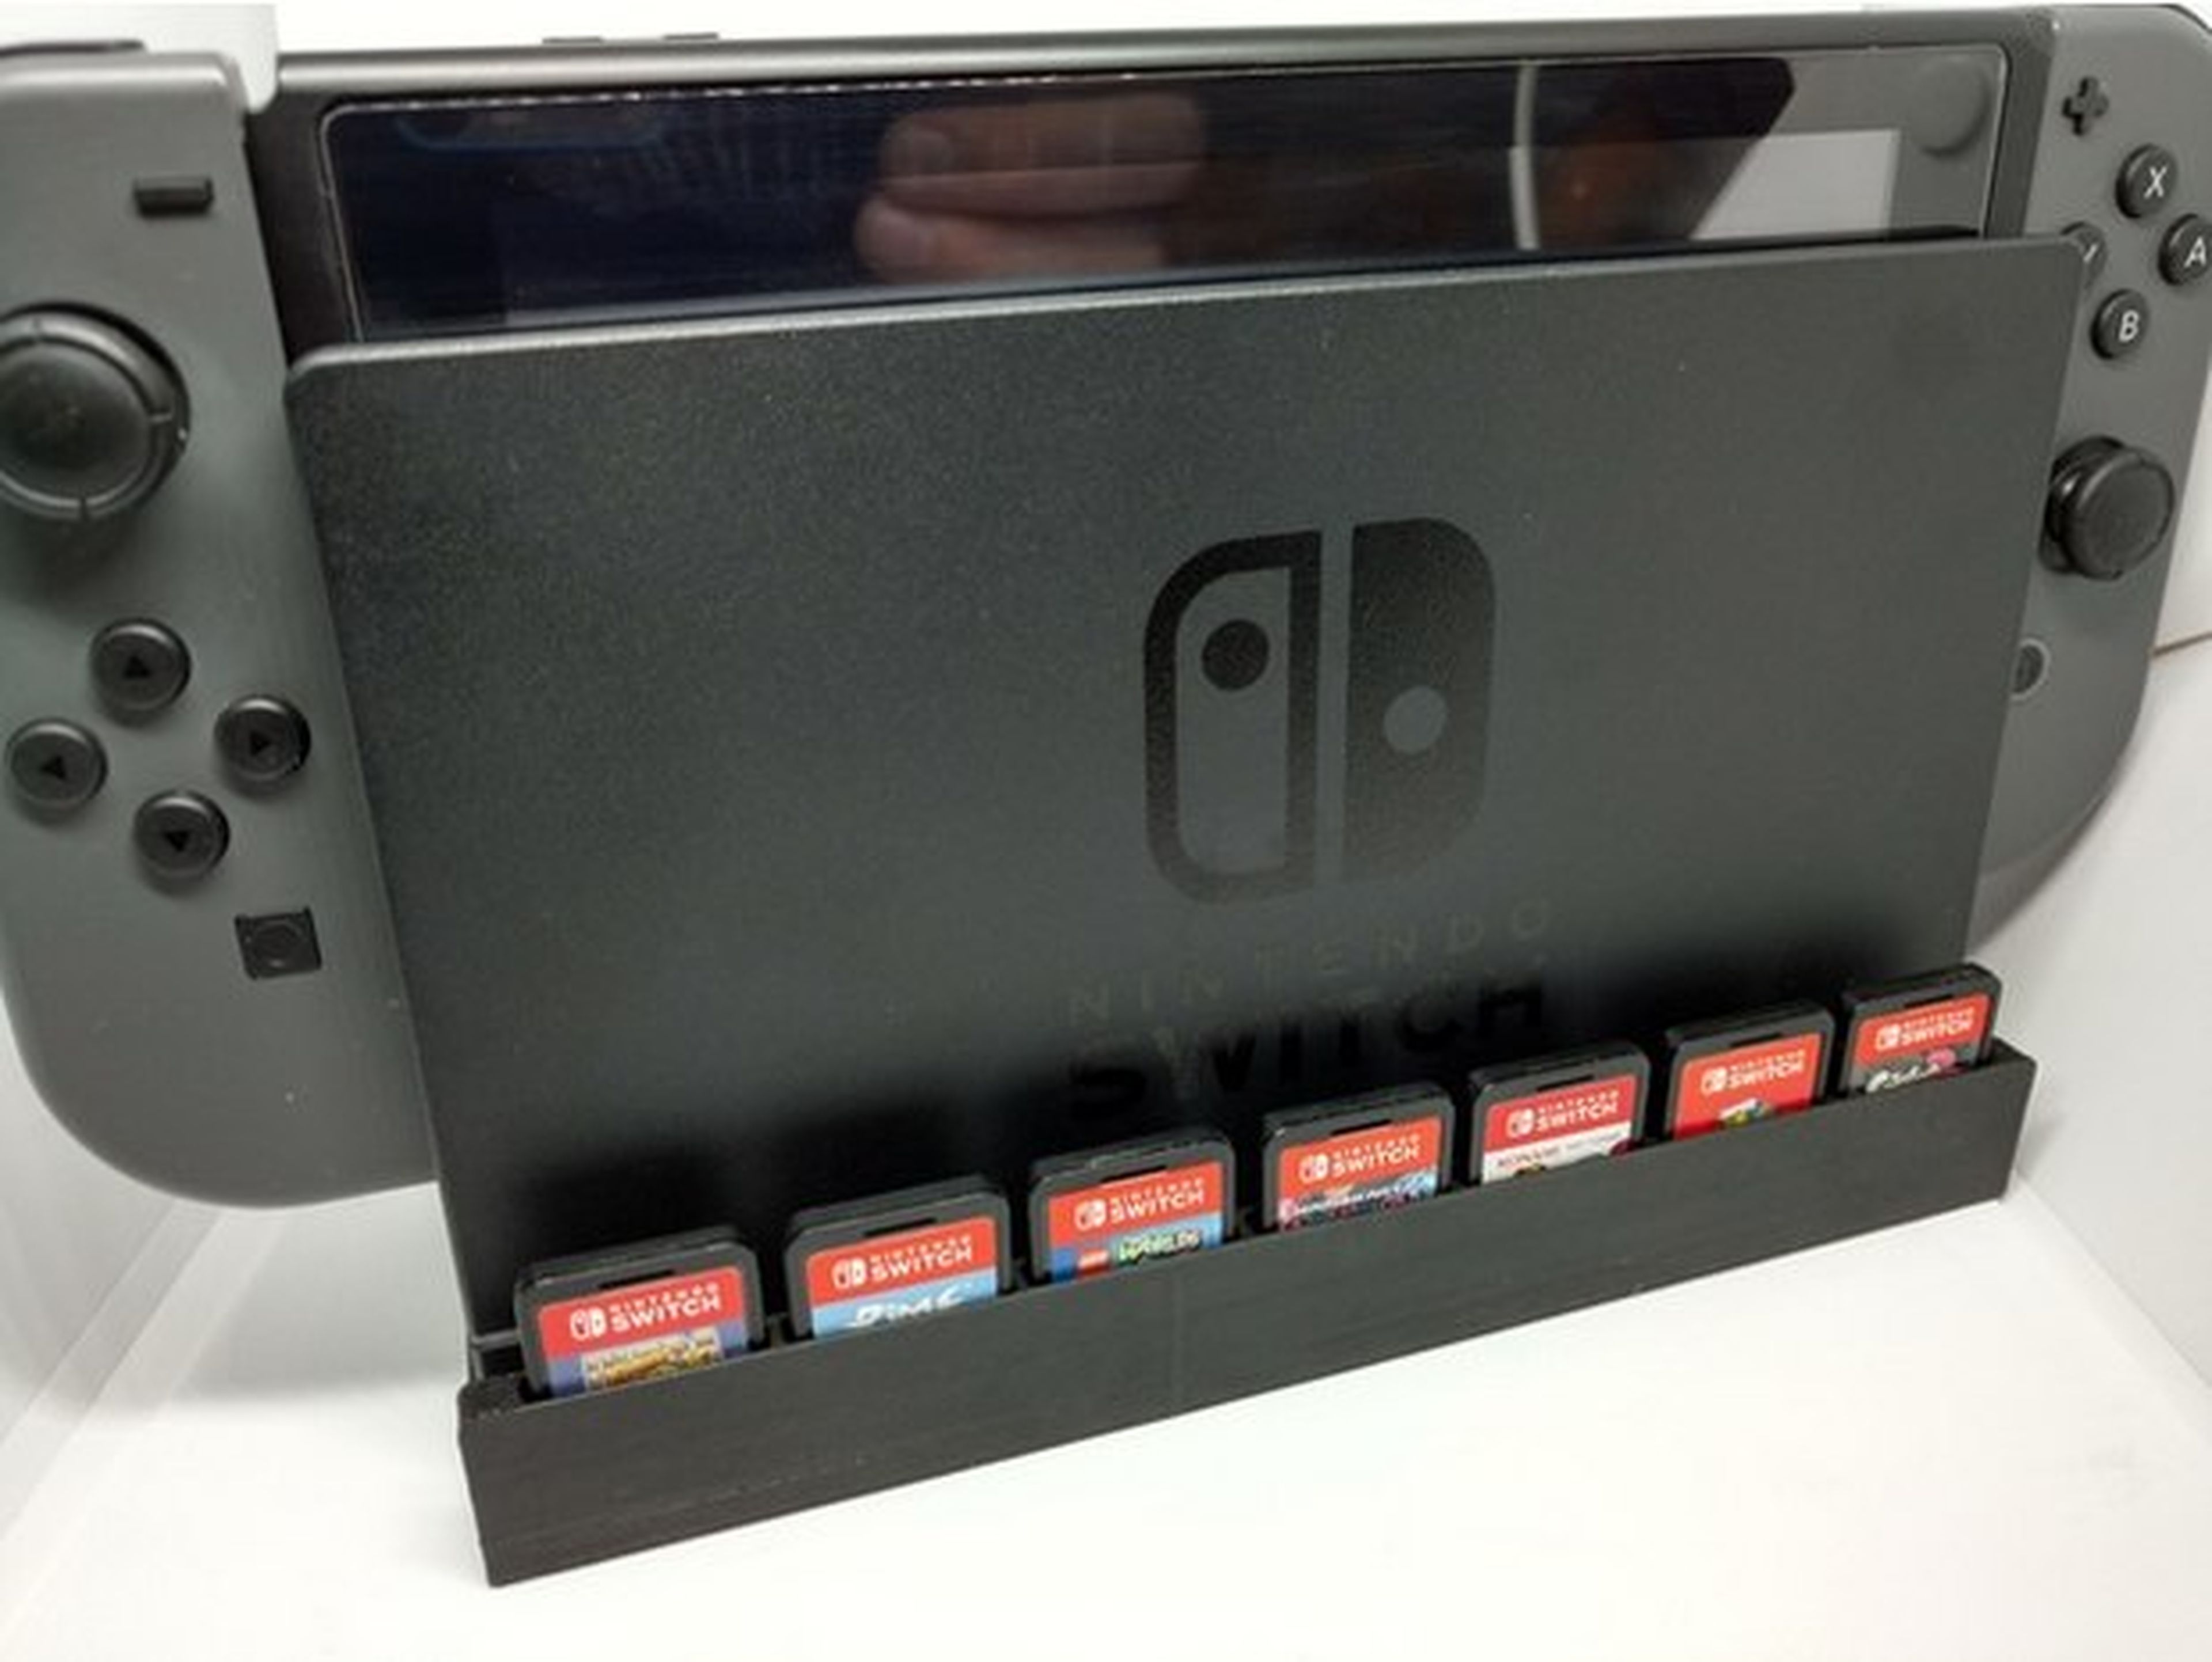 Accesorios caseros con impresora 3D Nintendo Switch